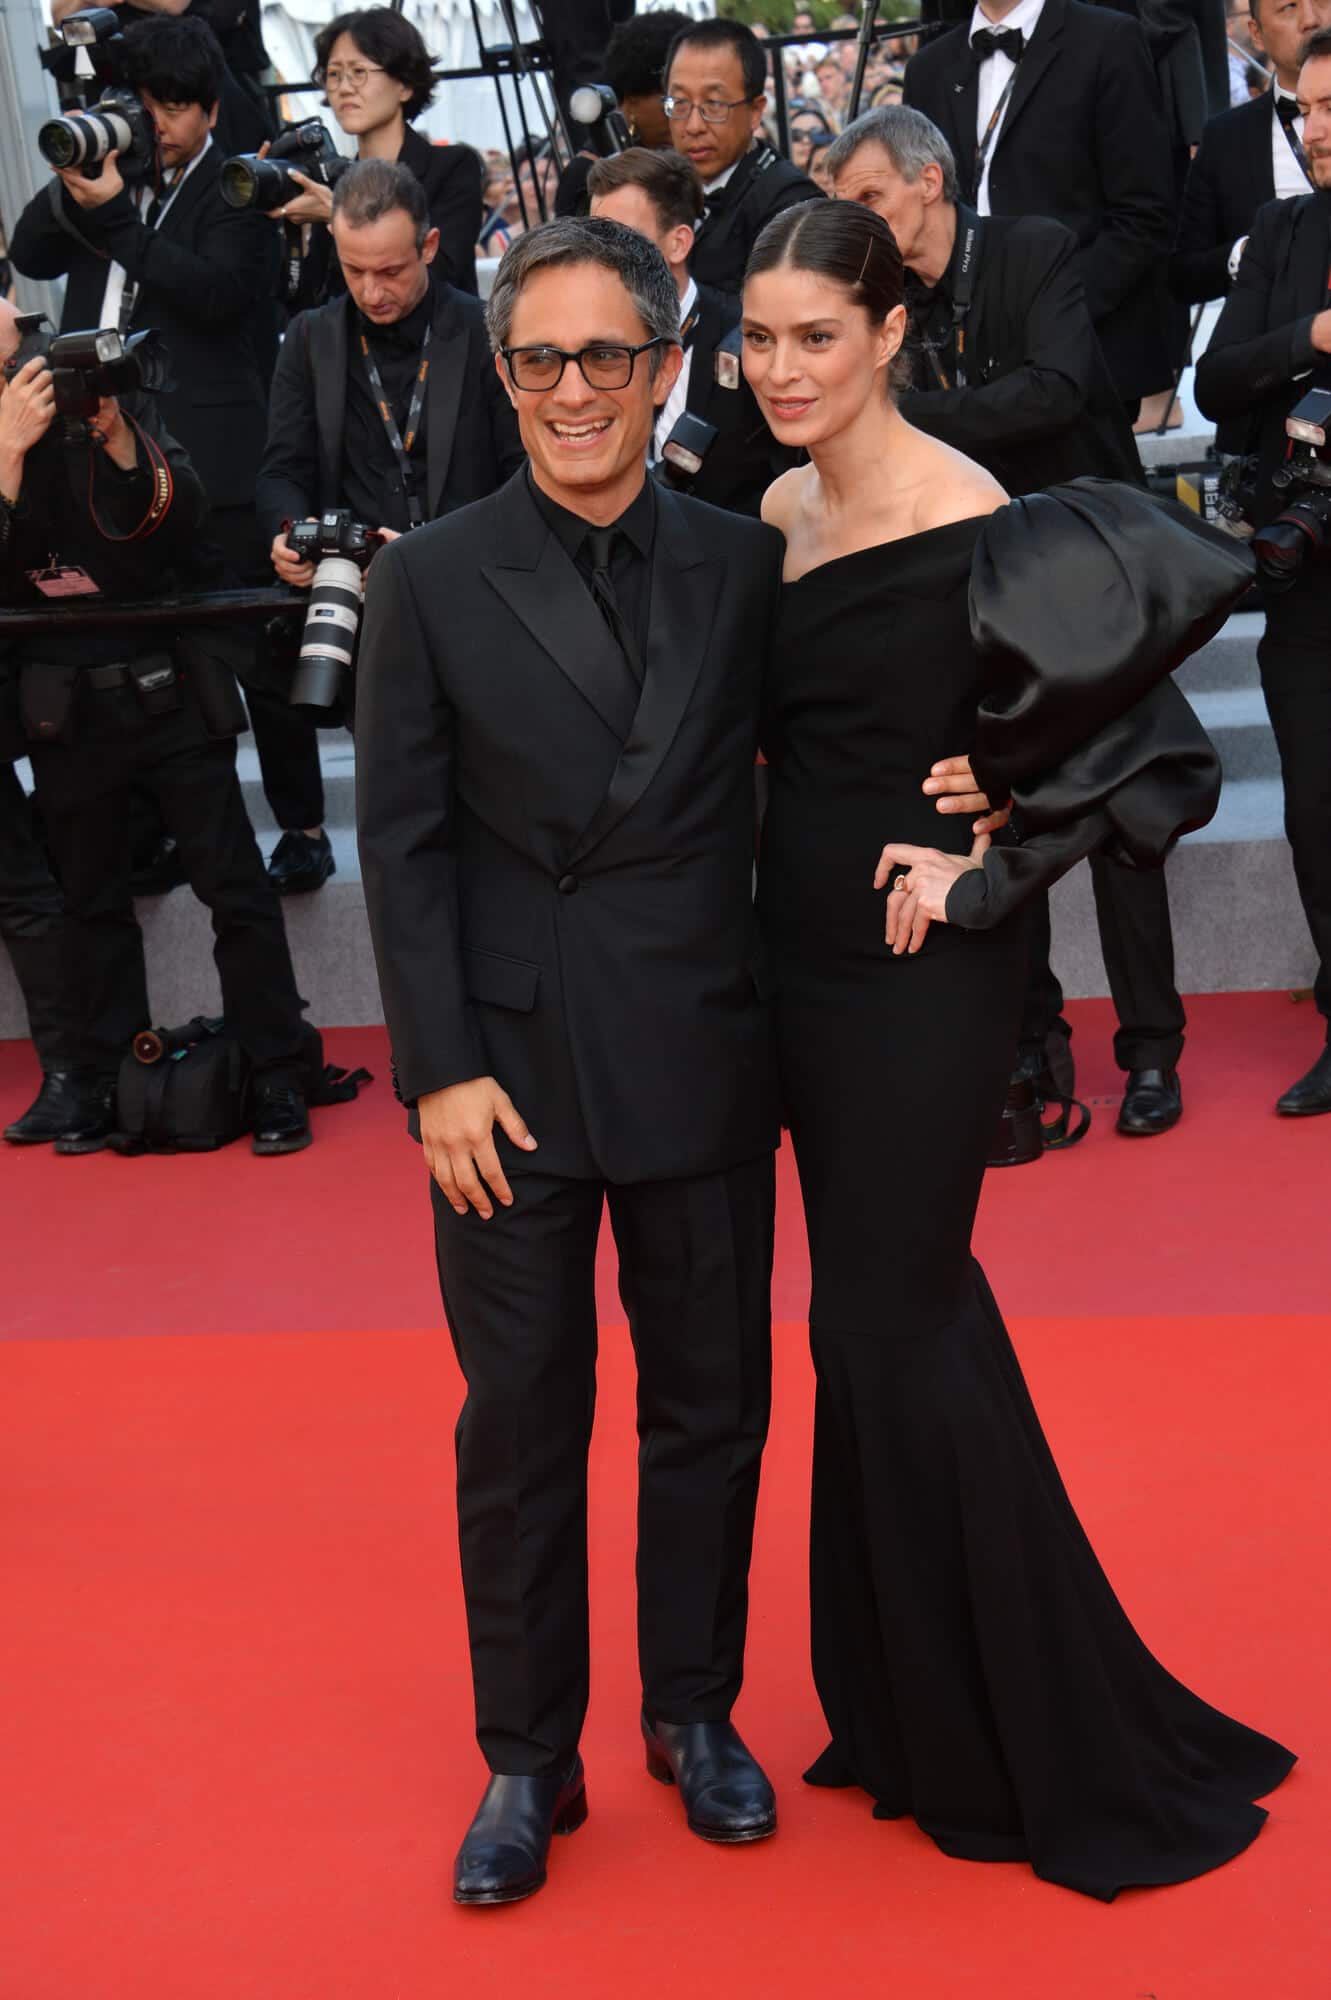 Gael Garcia Bernal at the premiere of the Festival de Cannes